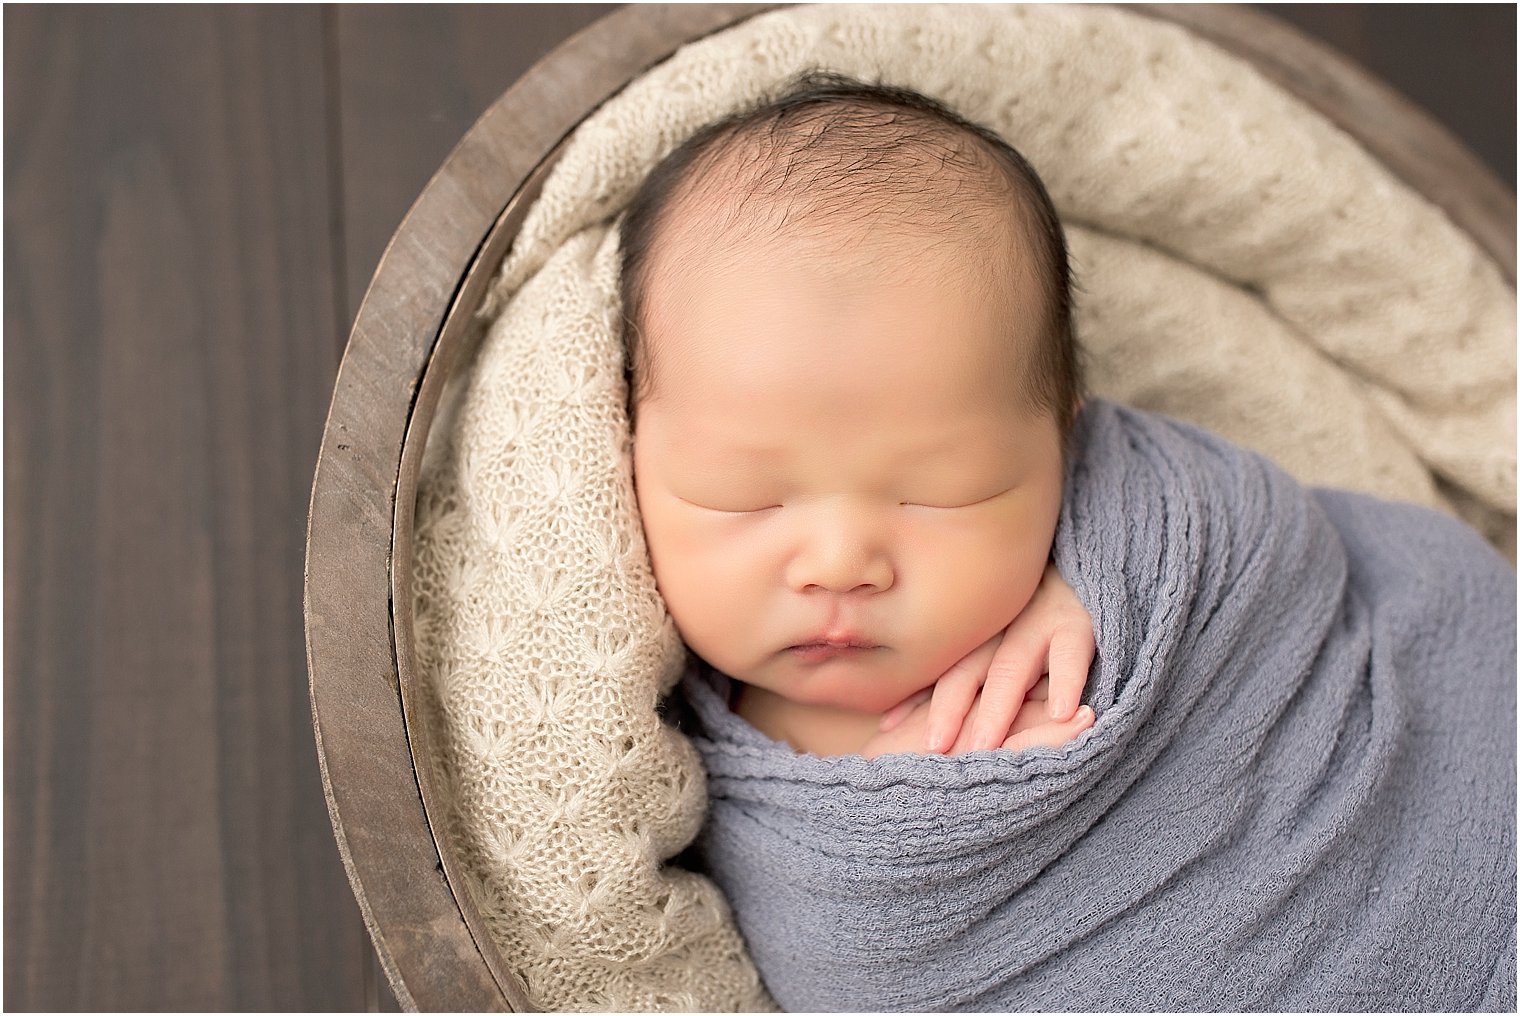 Newborn baby boy in blue and tan